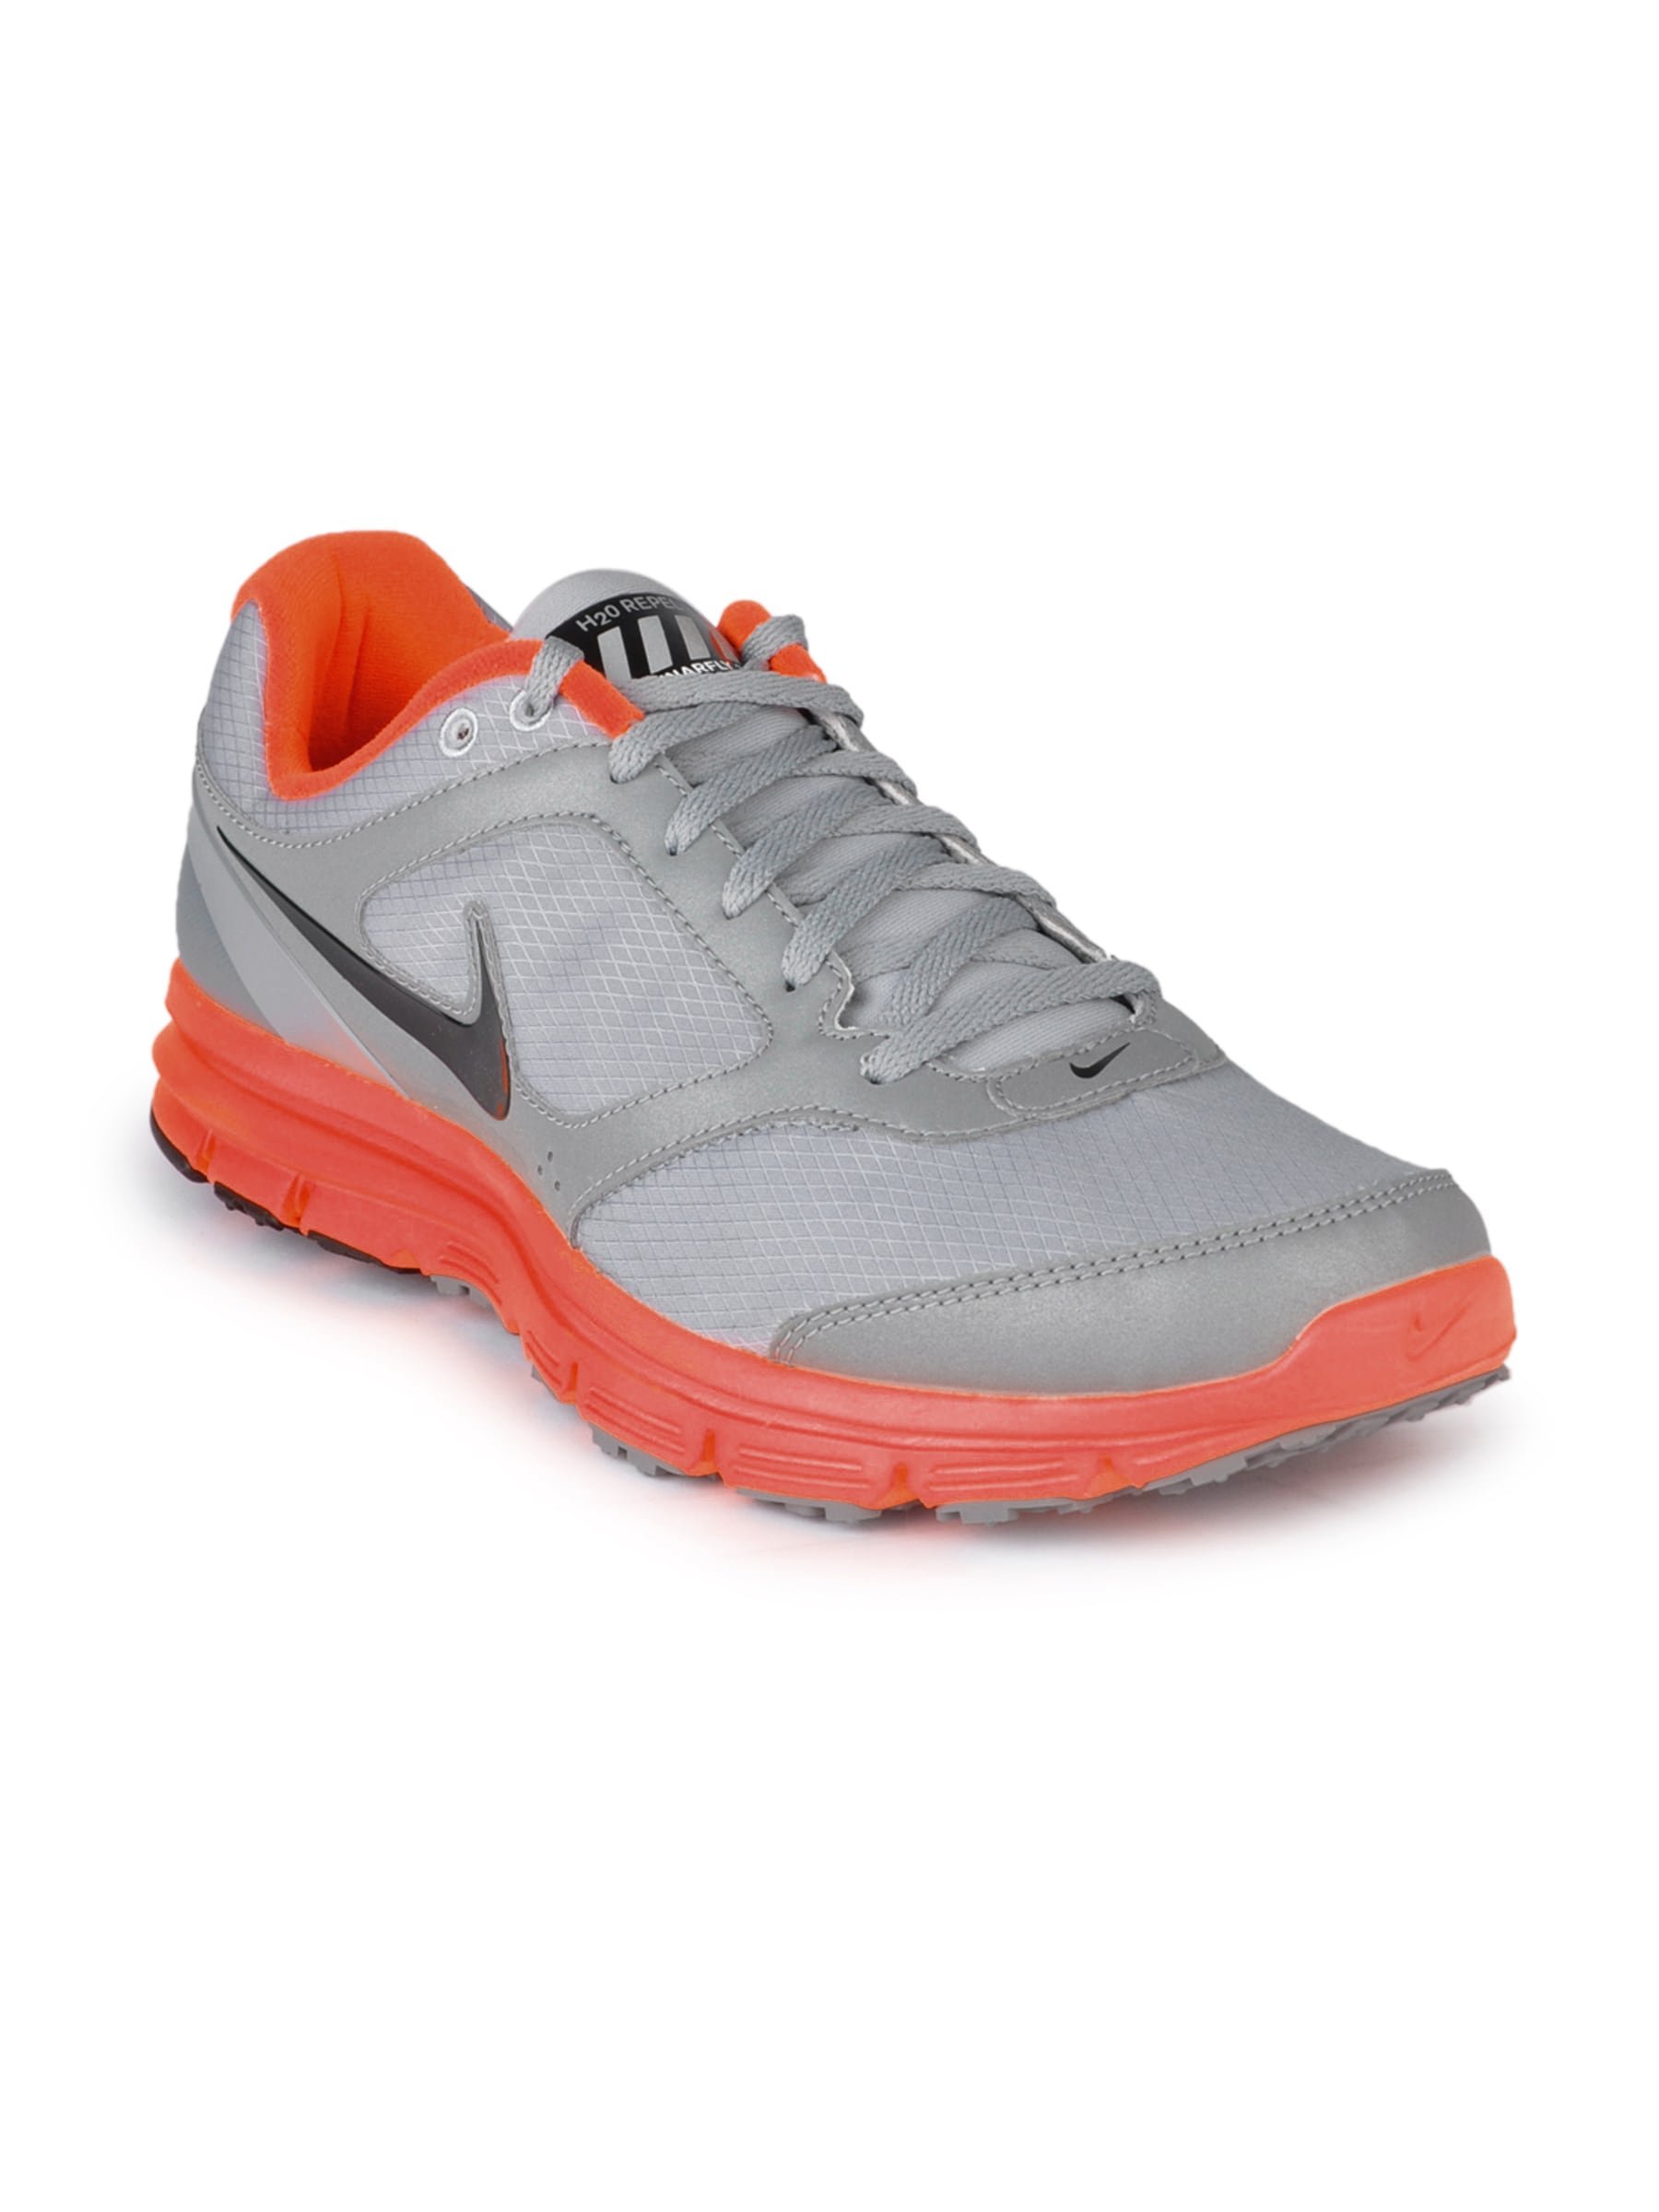 Nike Men Lunarfly+2 Shield Grey Sports Shoes